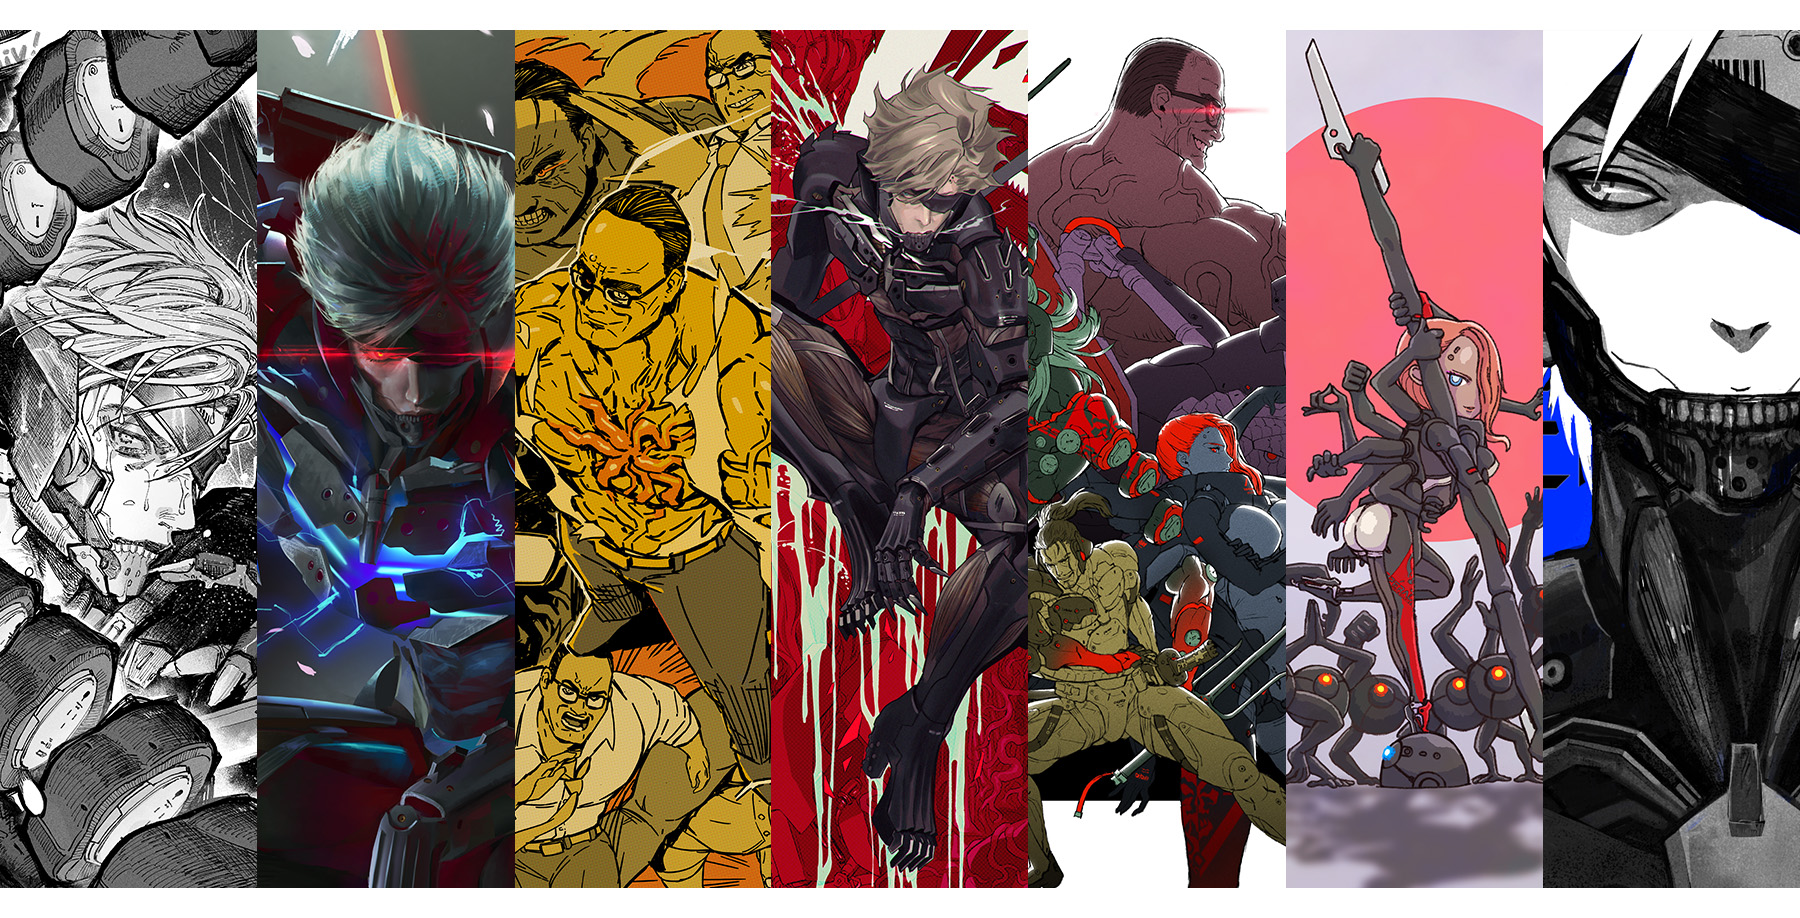 Metal Gear Rising: Revengeance 10th Anniversary Event Scheduled